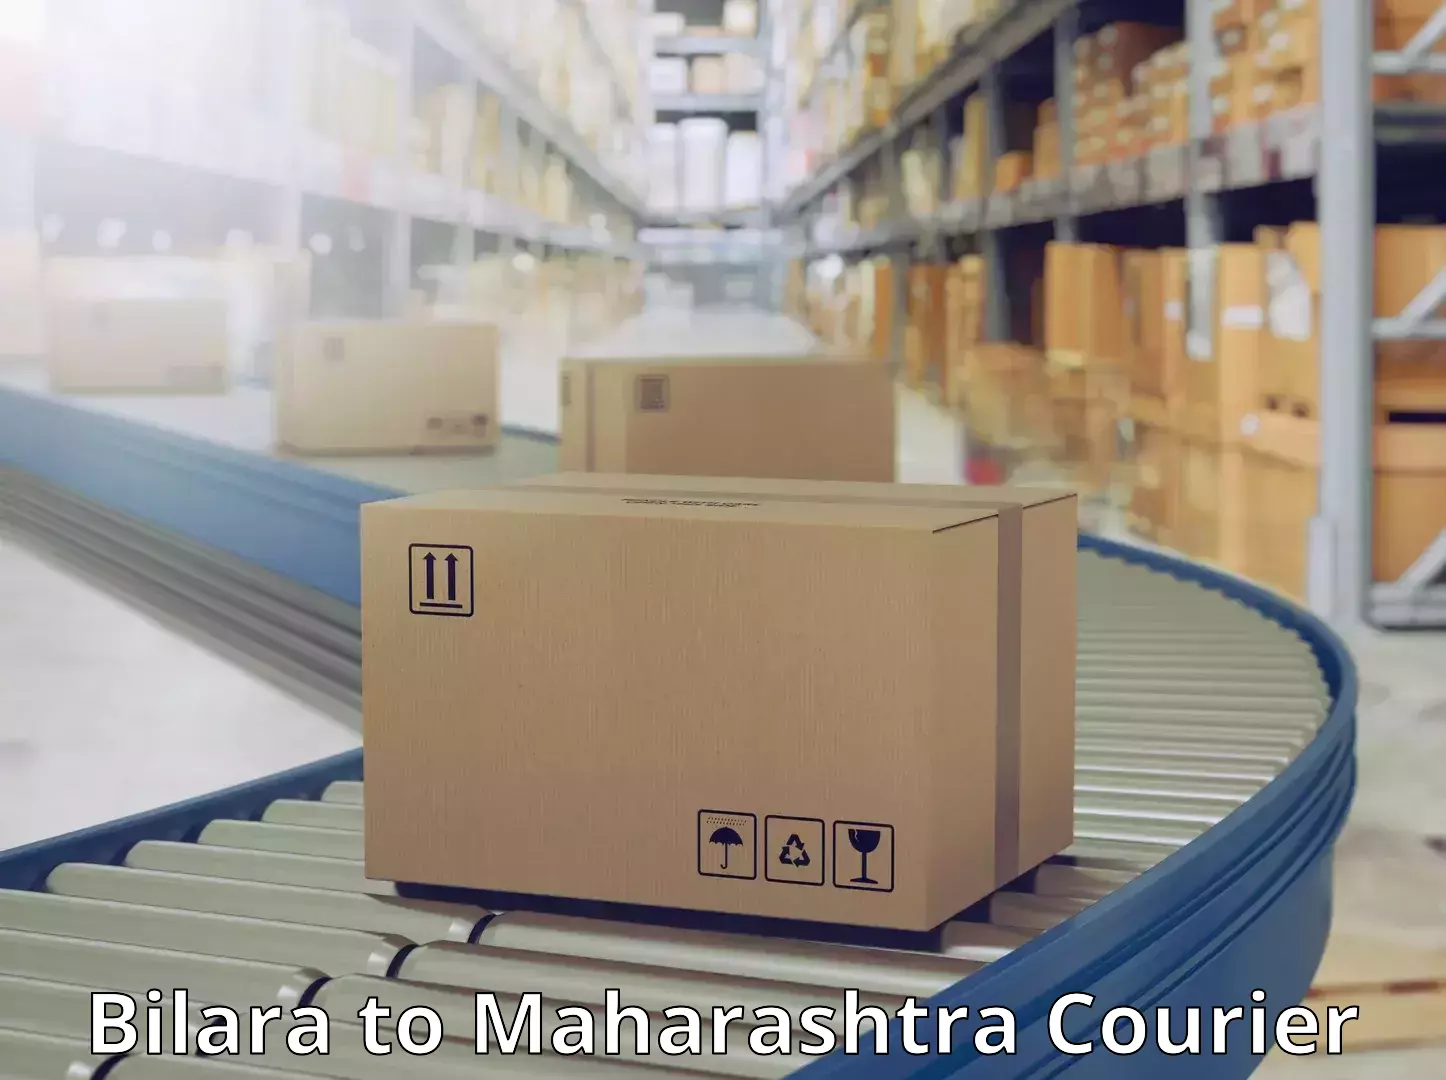 State-of-the-art courier technology Bilara to Mahagaon